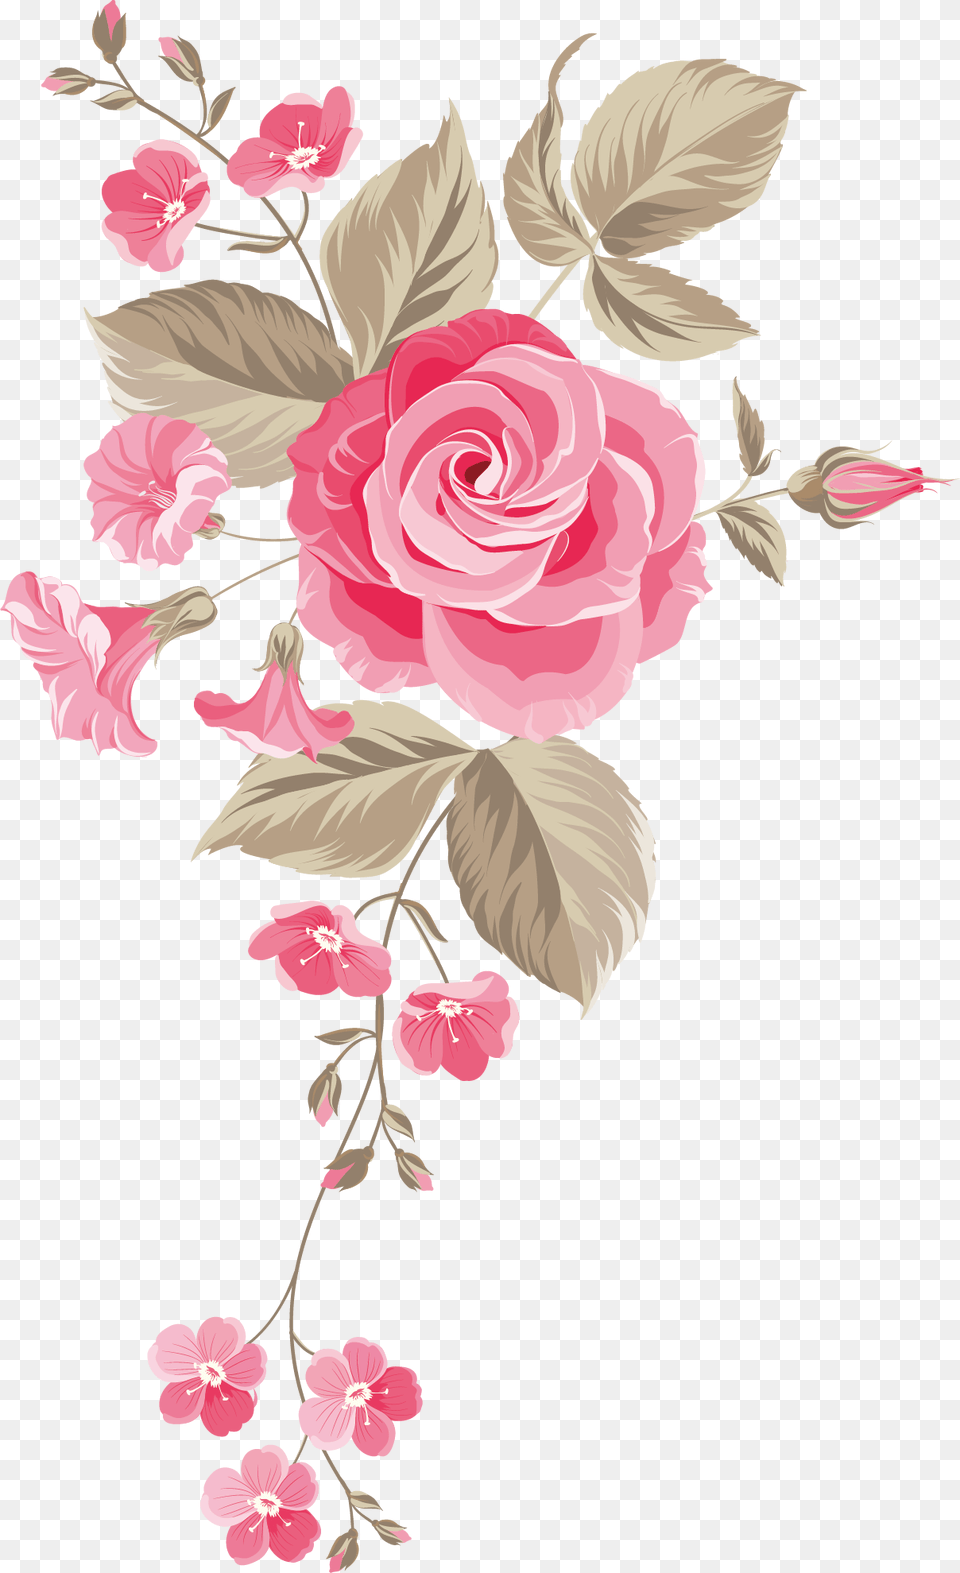 Rose Flower Image Searchpng Transparent Background Pink Roses, Art, Floral Design, Graphics, Pattern Free Png Download